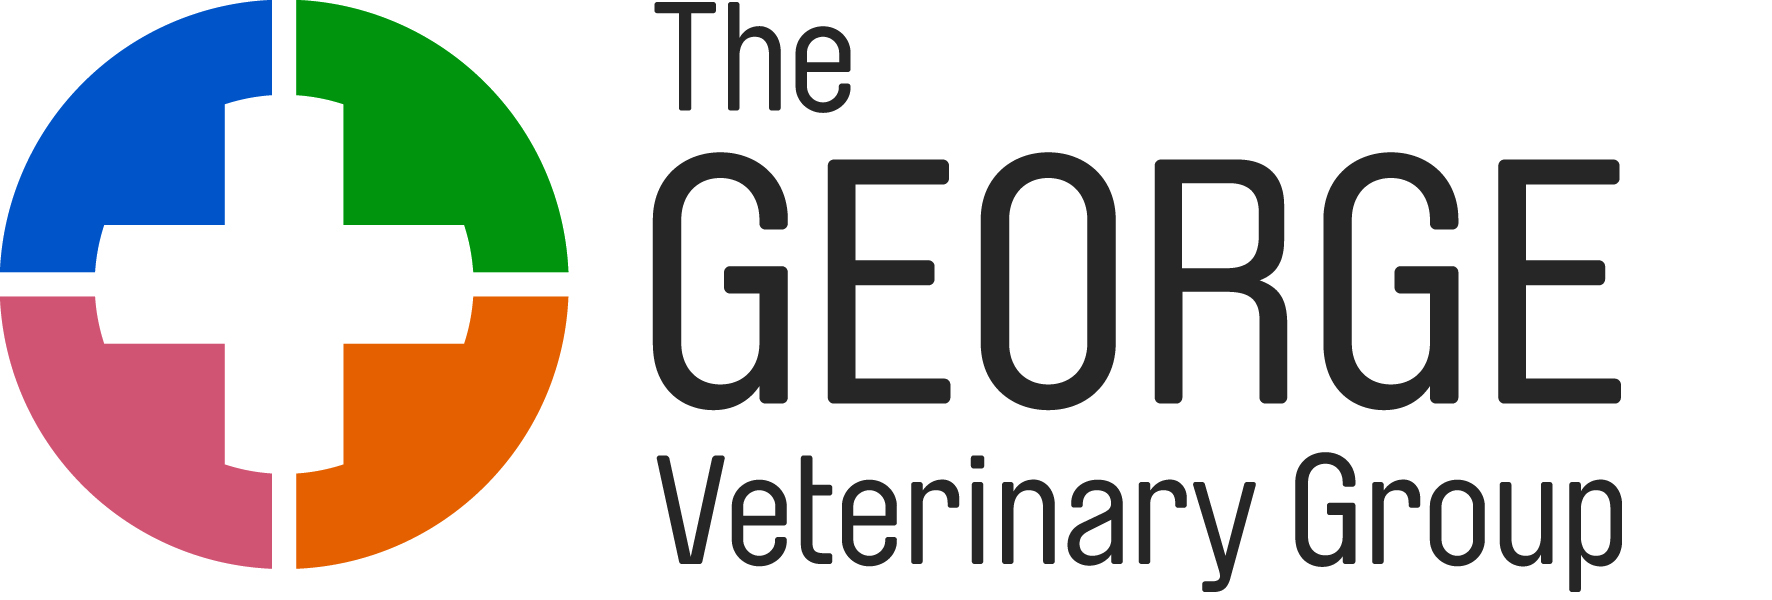 The George Vet Group logo